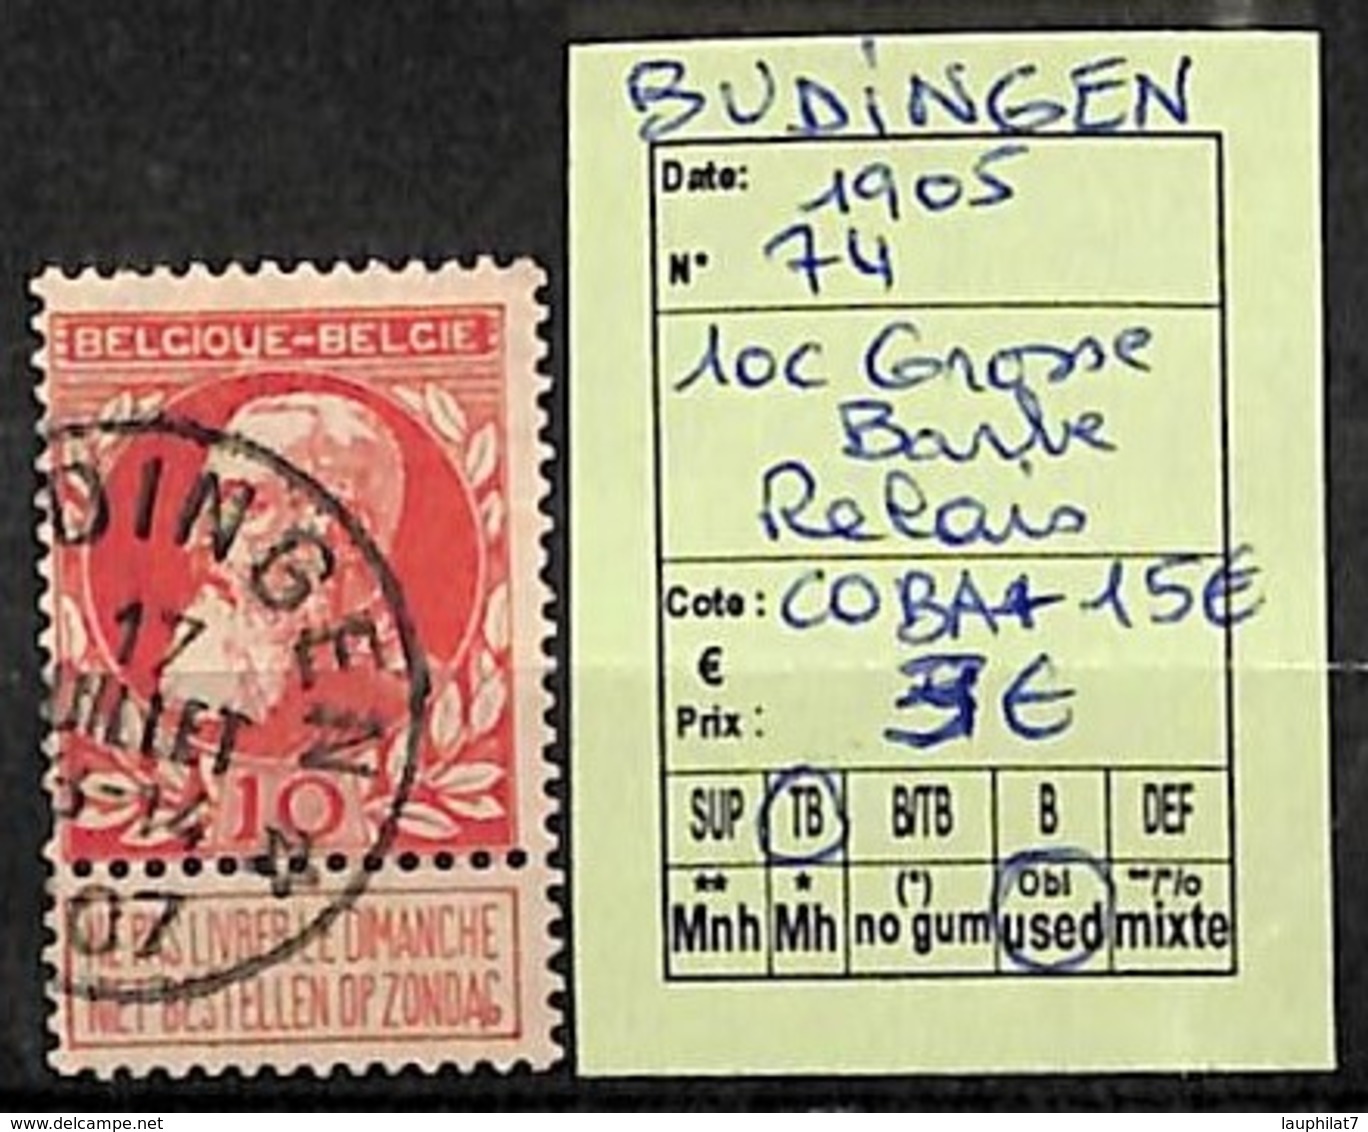 [822918]Belgique 1905 - N° 74, Budingen, Relais - 1905 Grosse Barbe